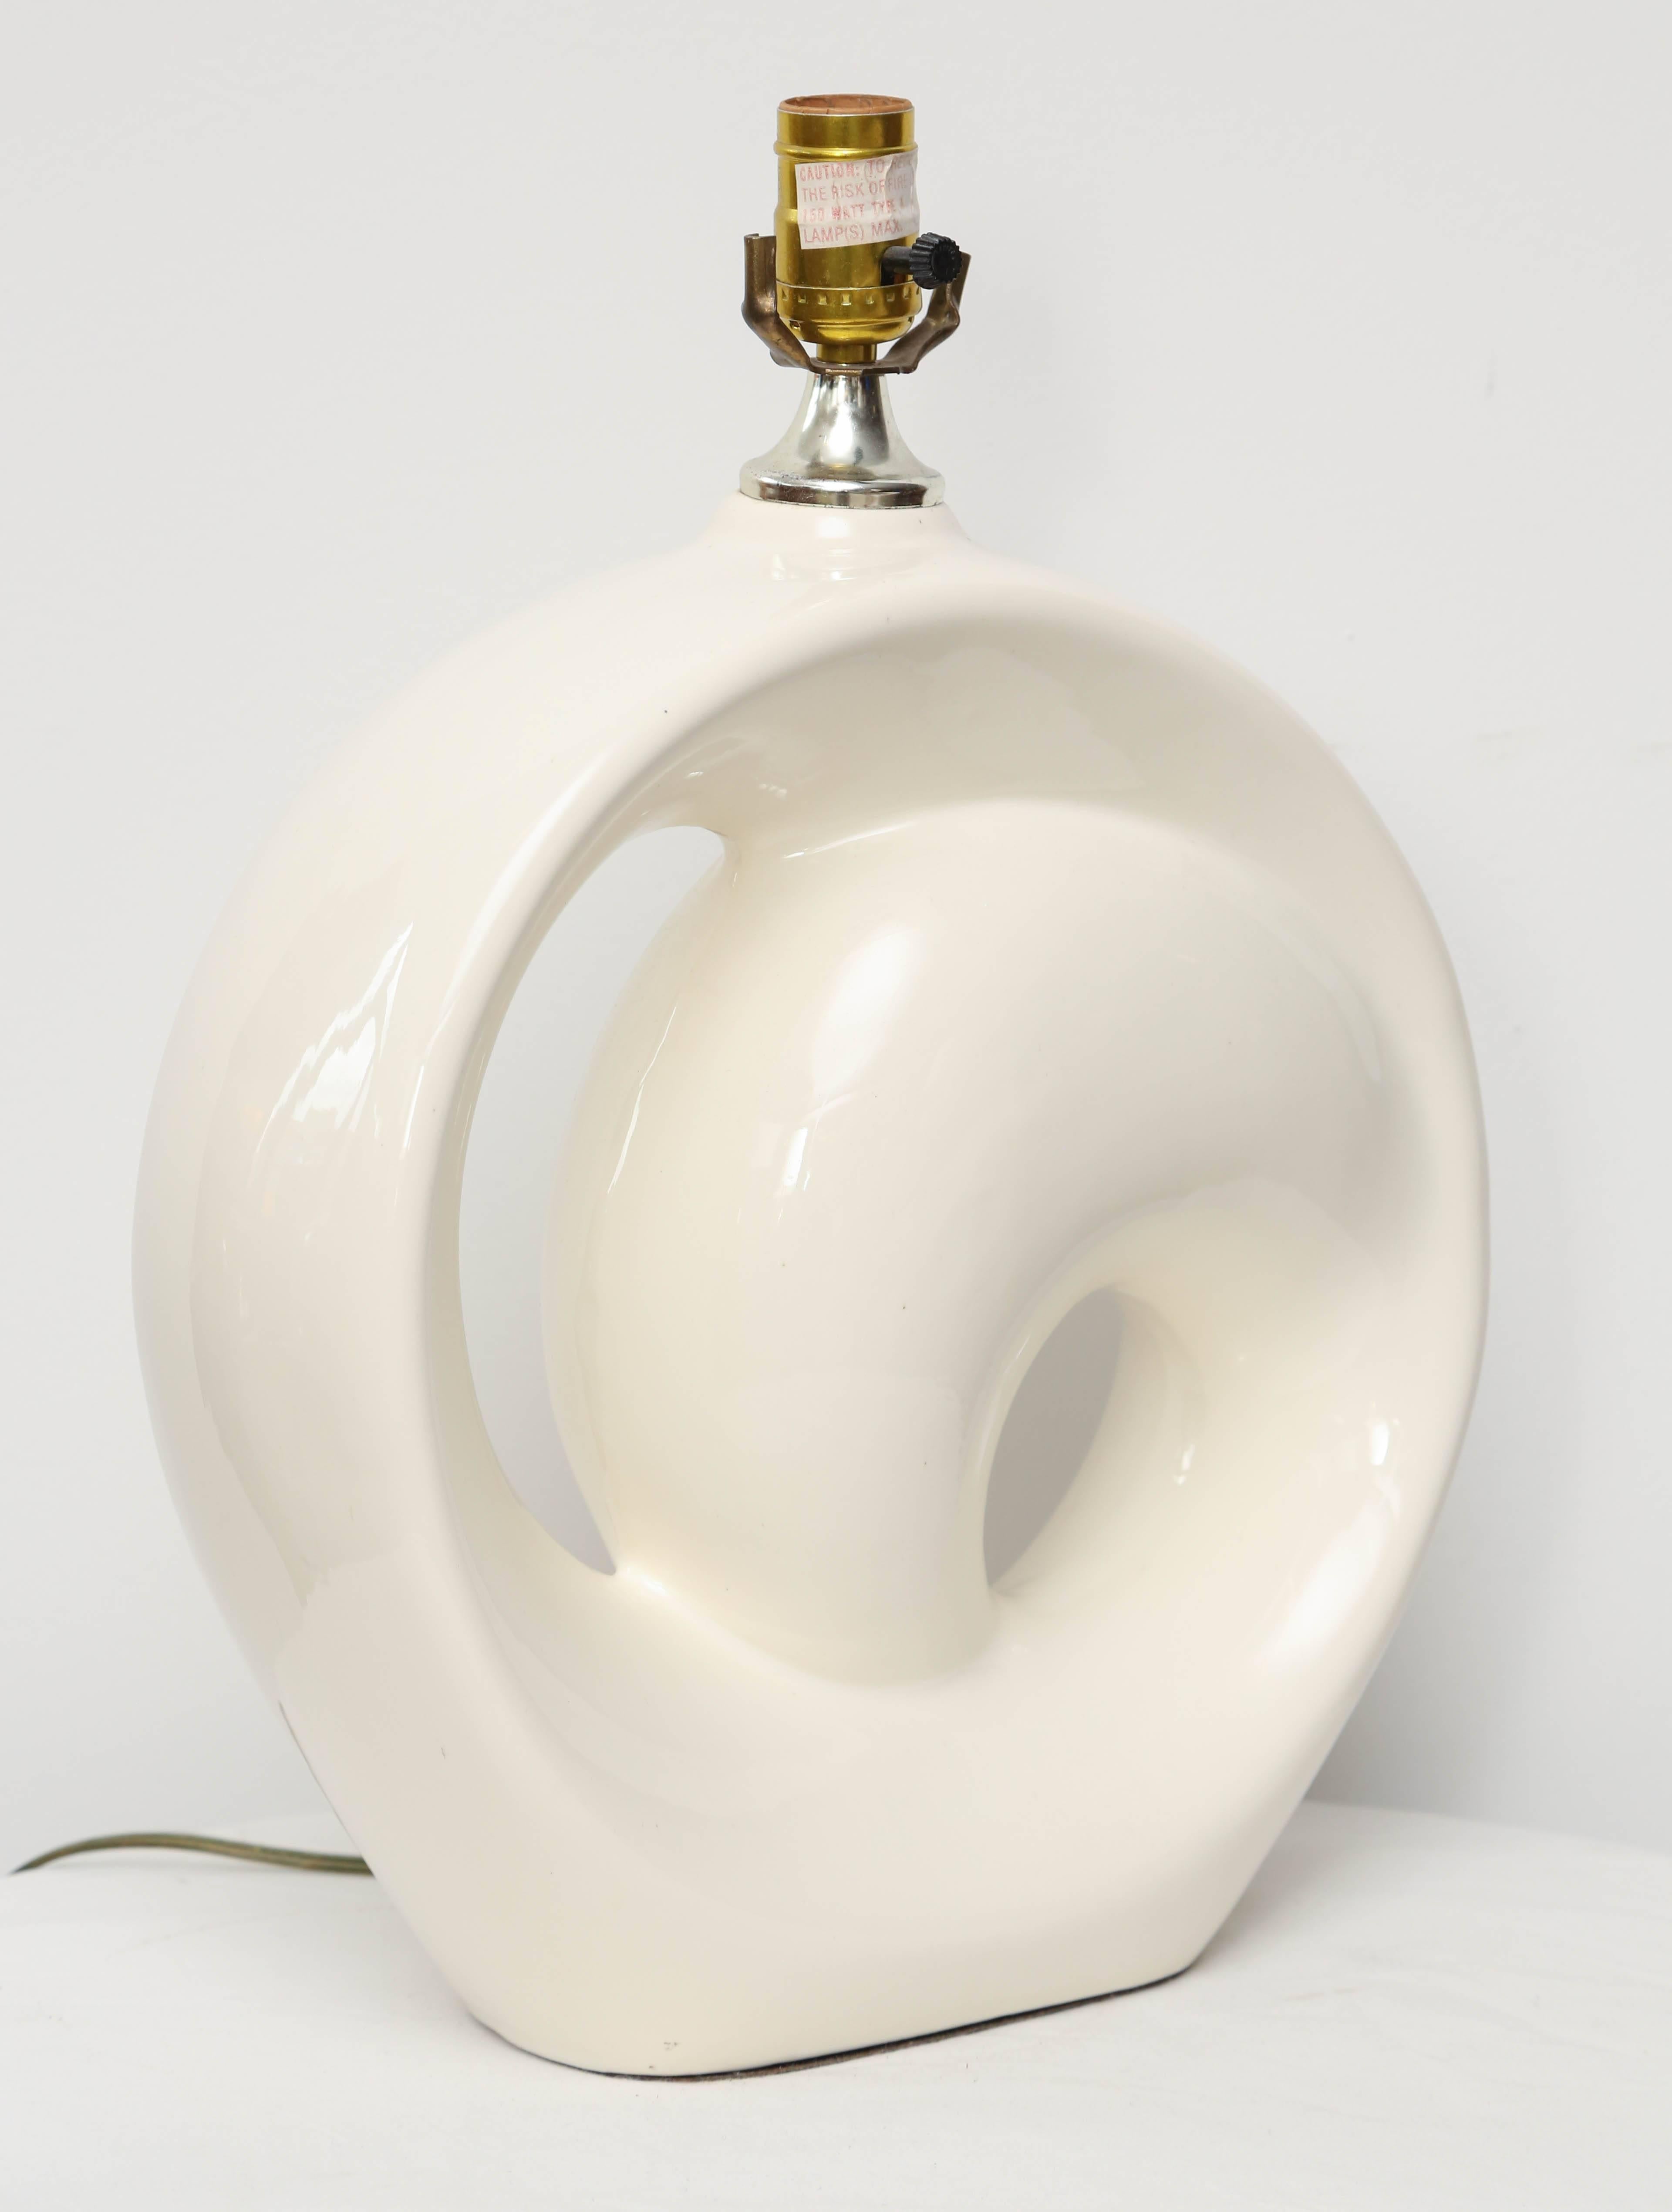 Wonderful single lamp in unique form in white ceramic.